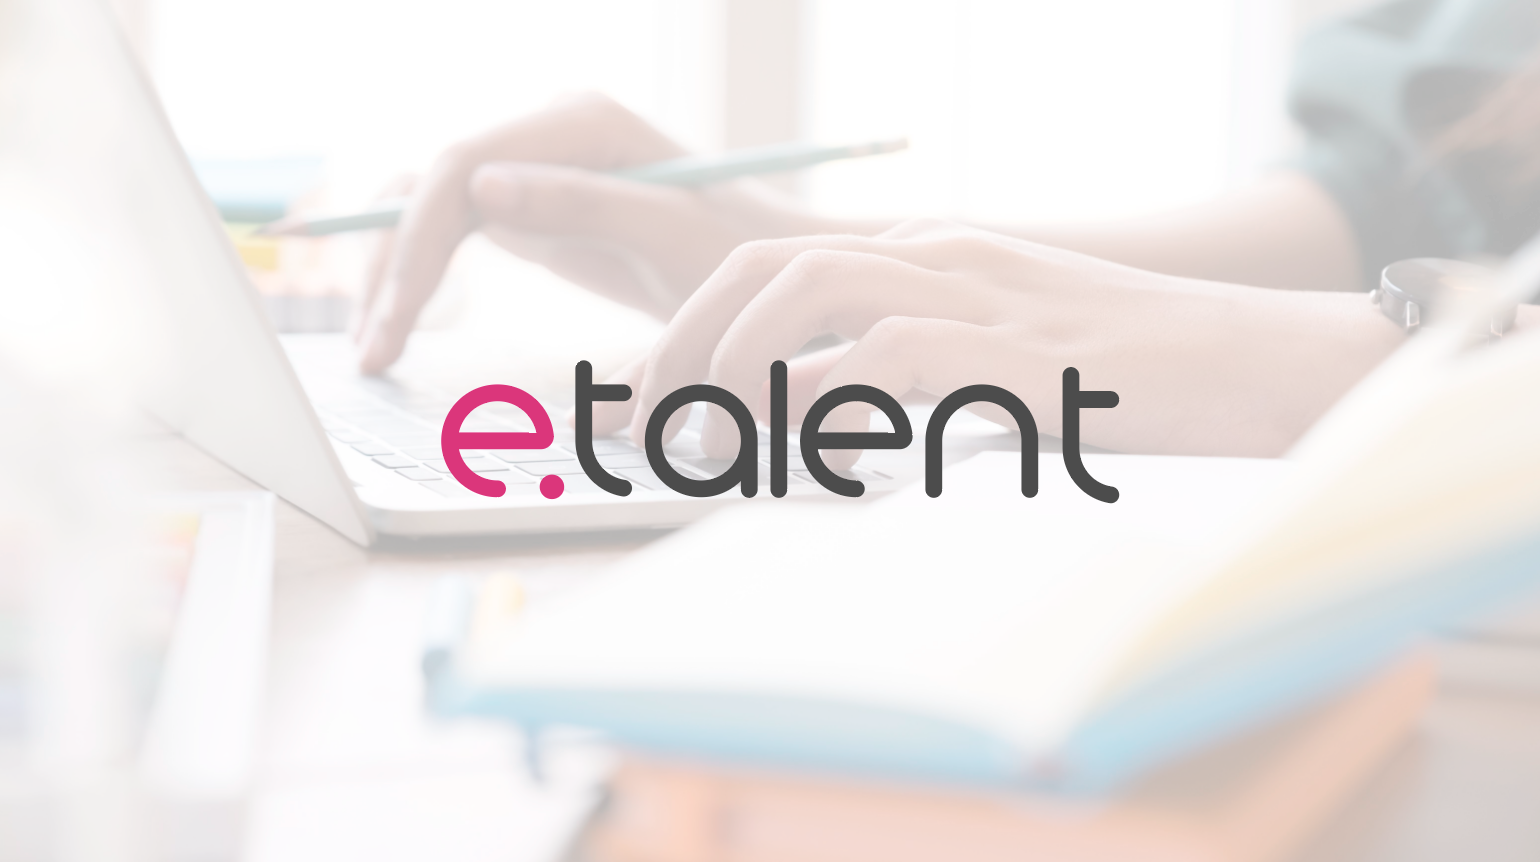 E-Talent